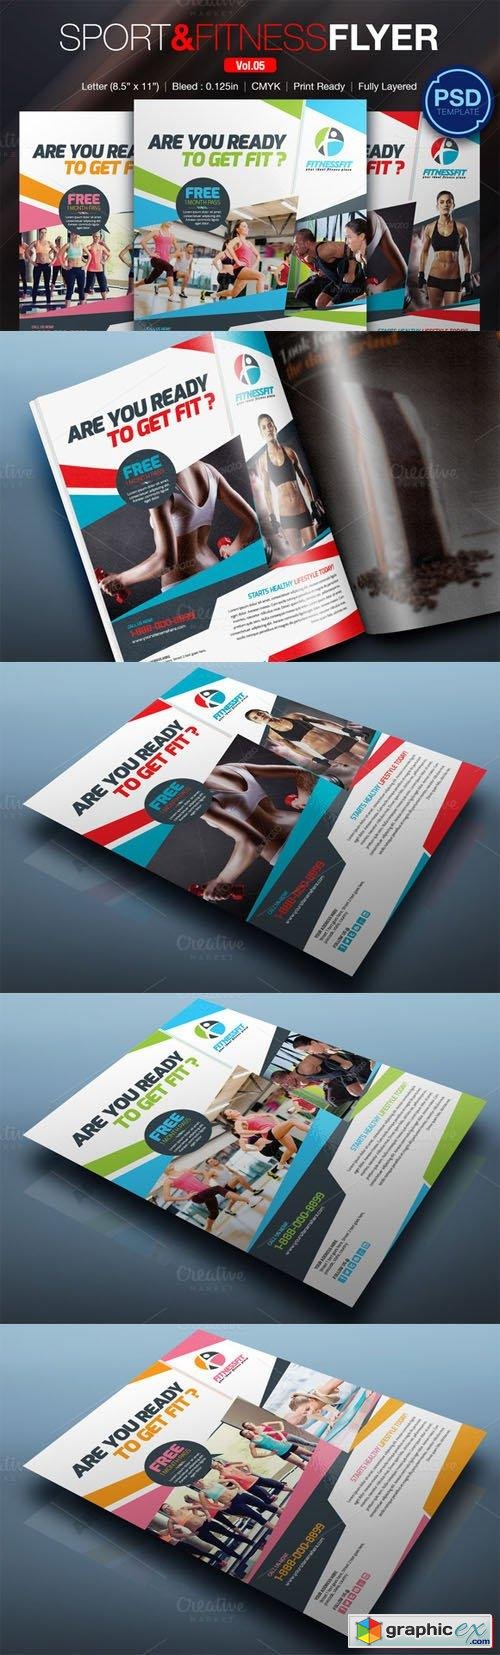  Sport & Fitness Flyer Vol.05